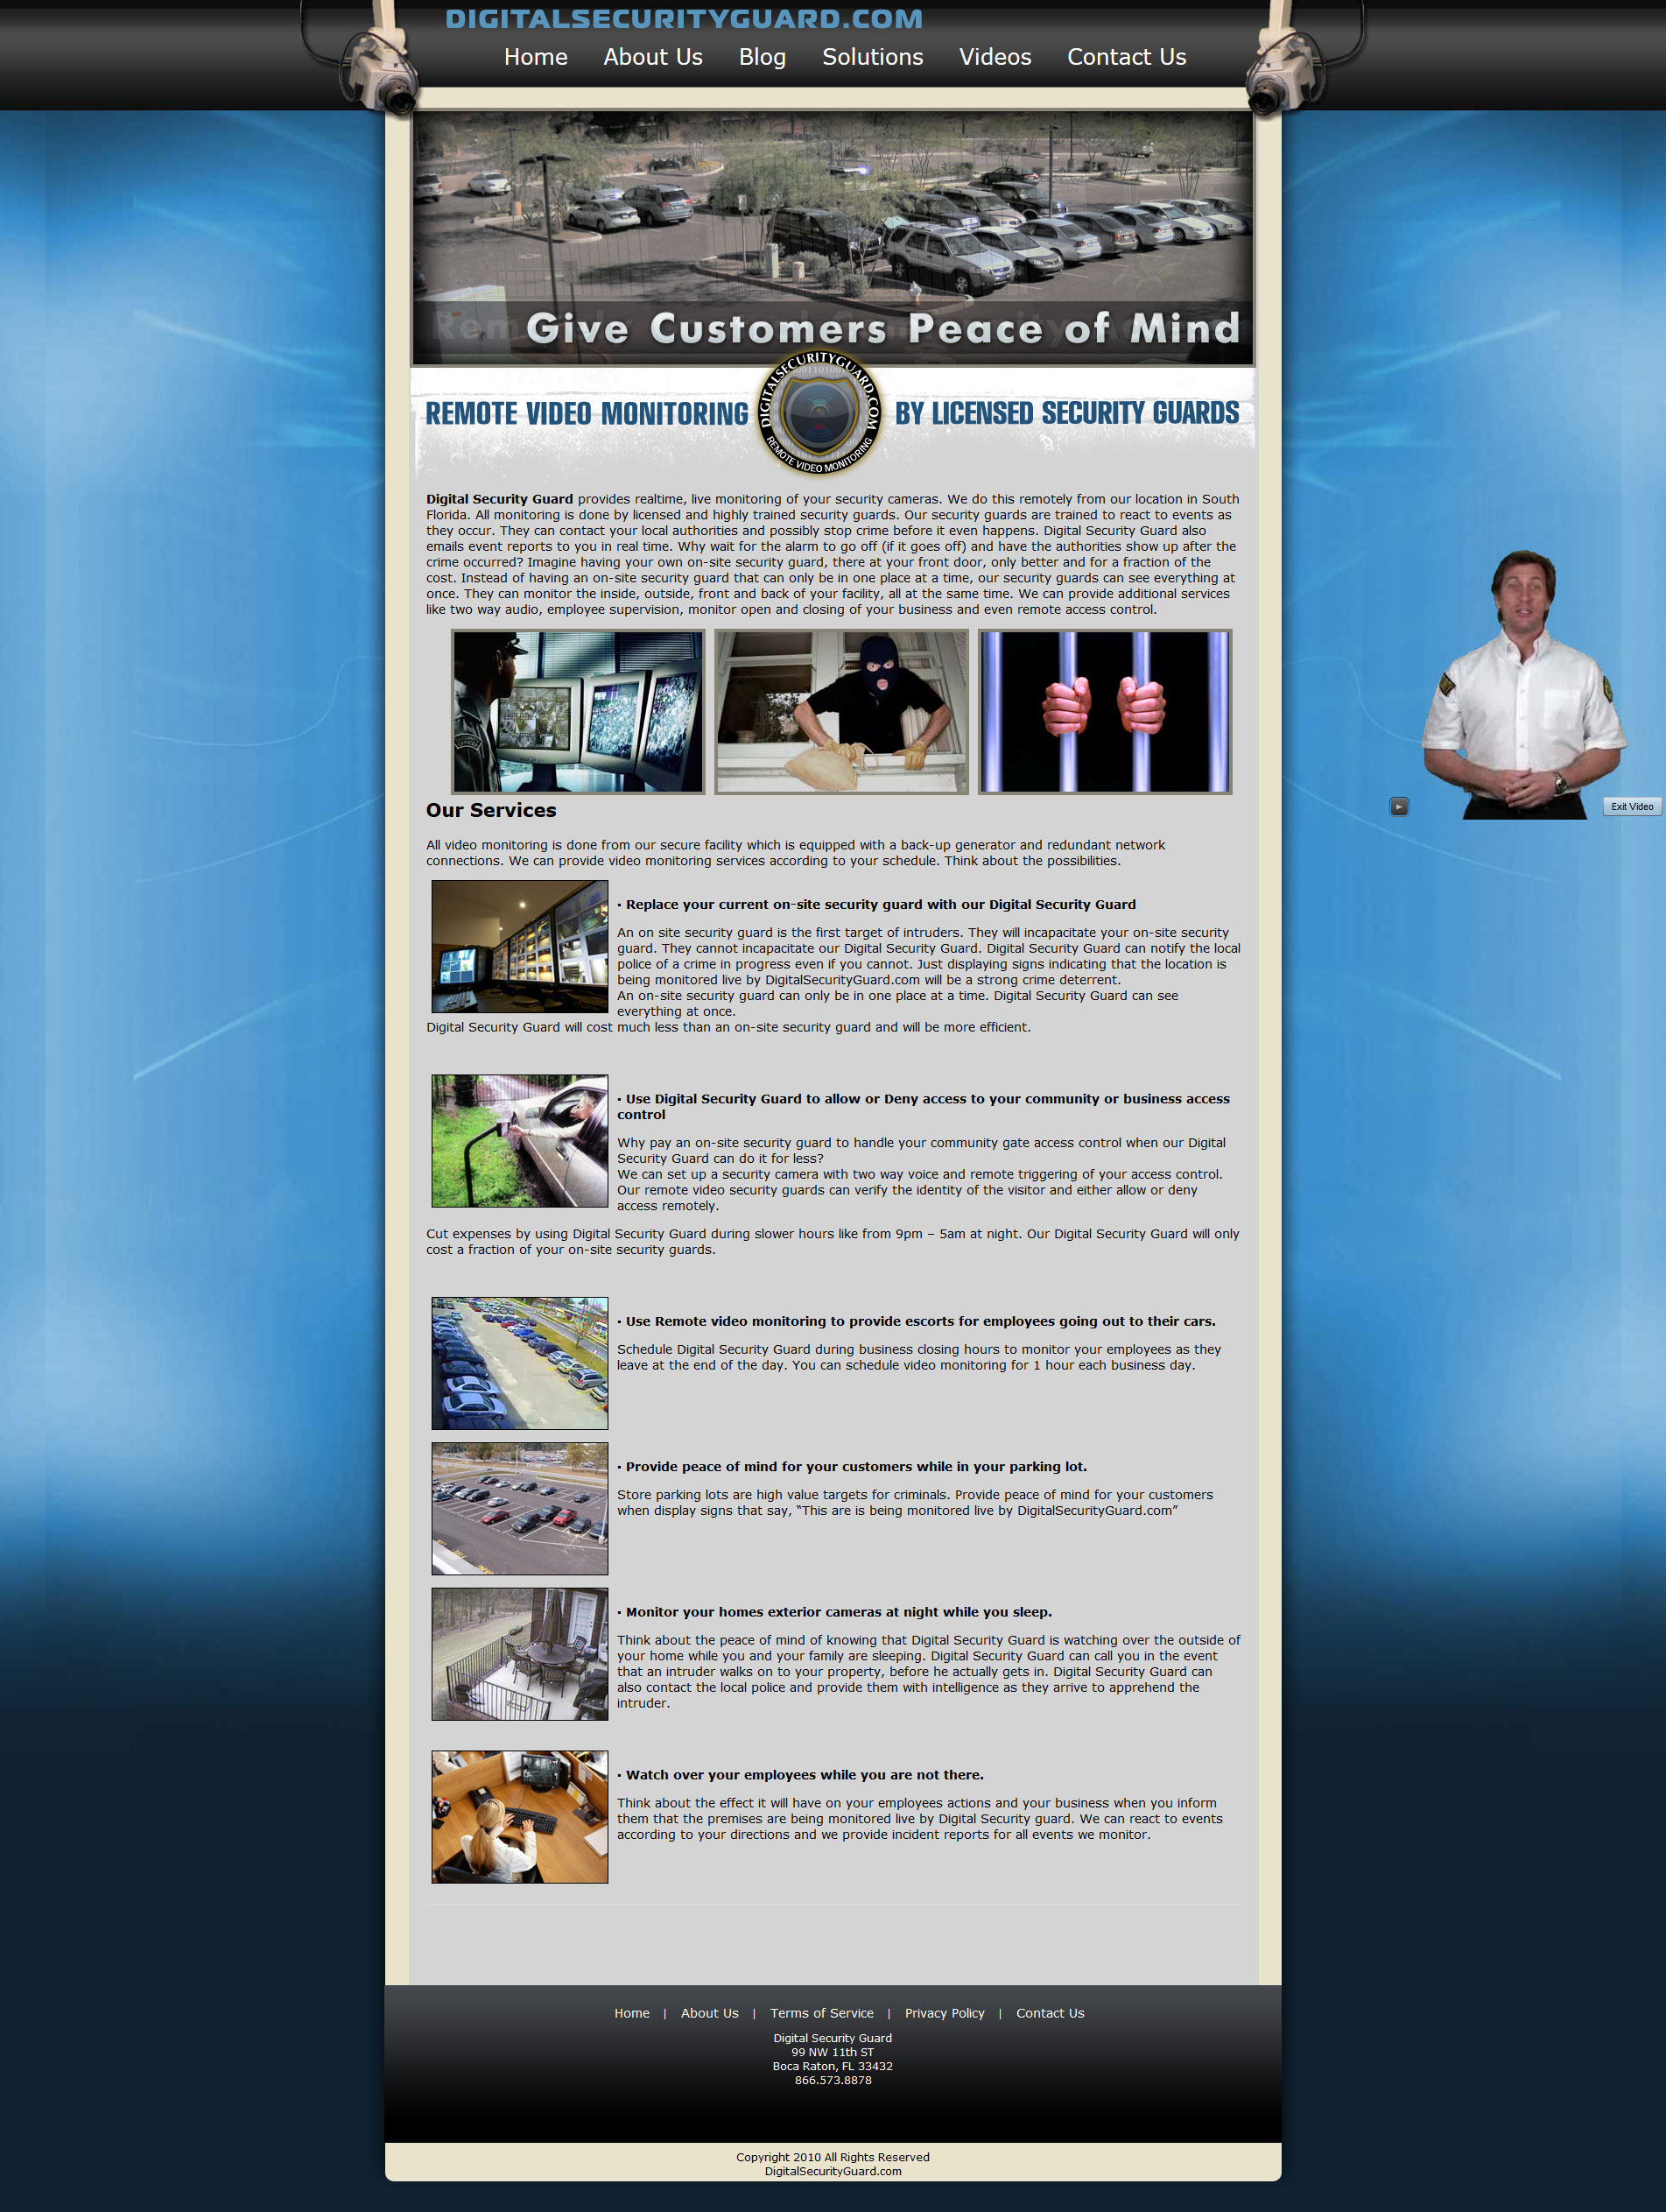 Digital Security Guard Website Created by Dro Simoes at digitalsecurityguard.com